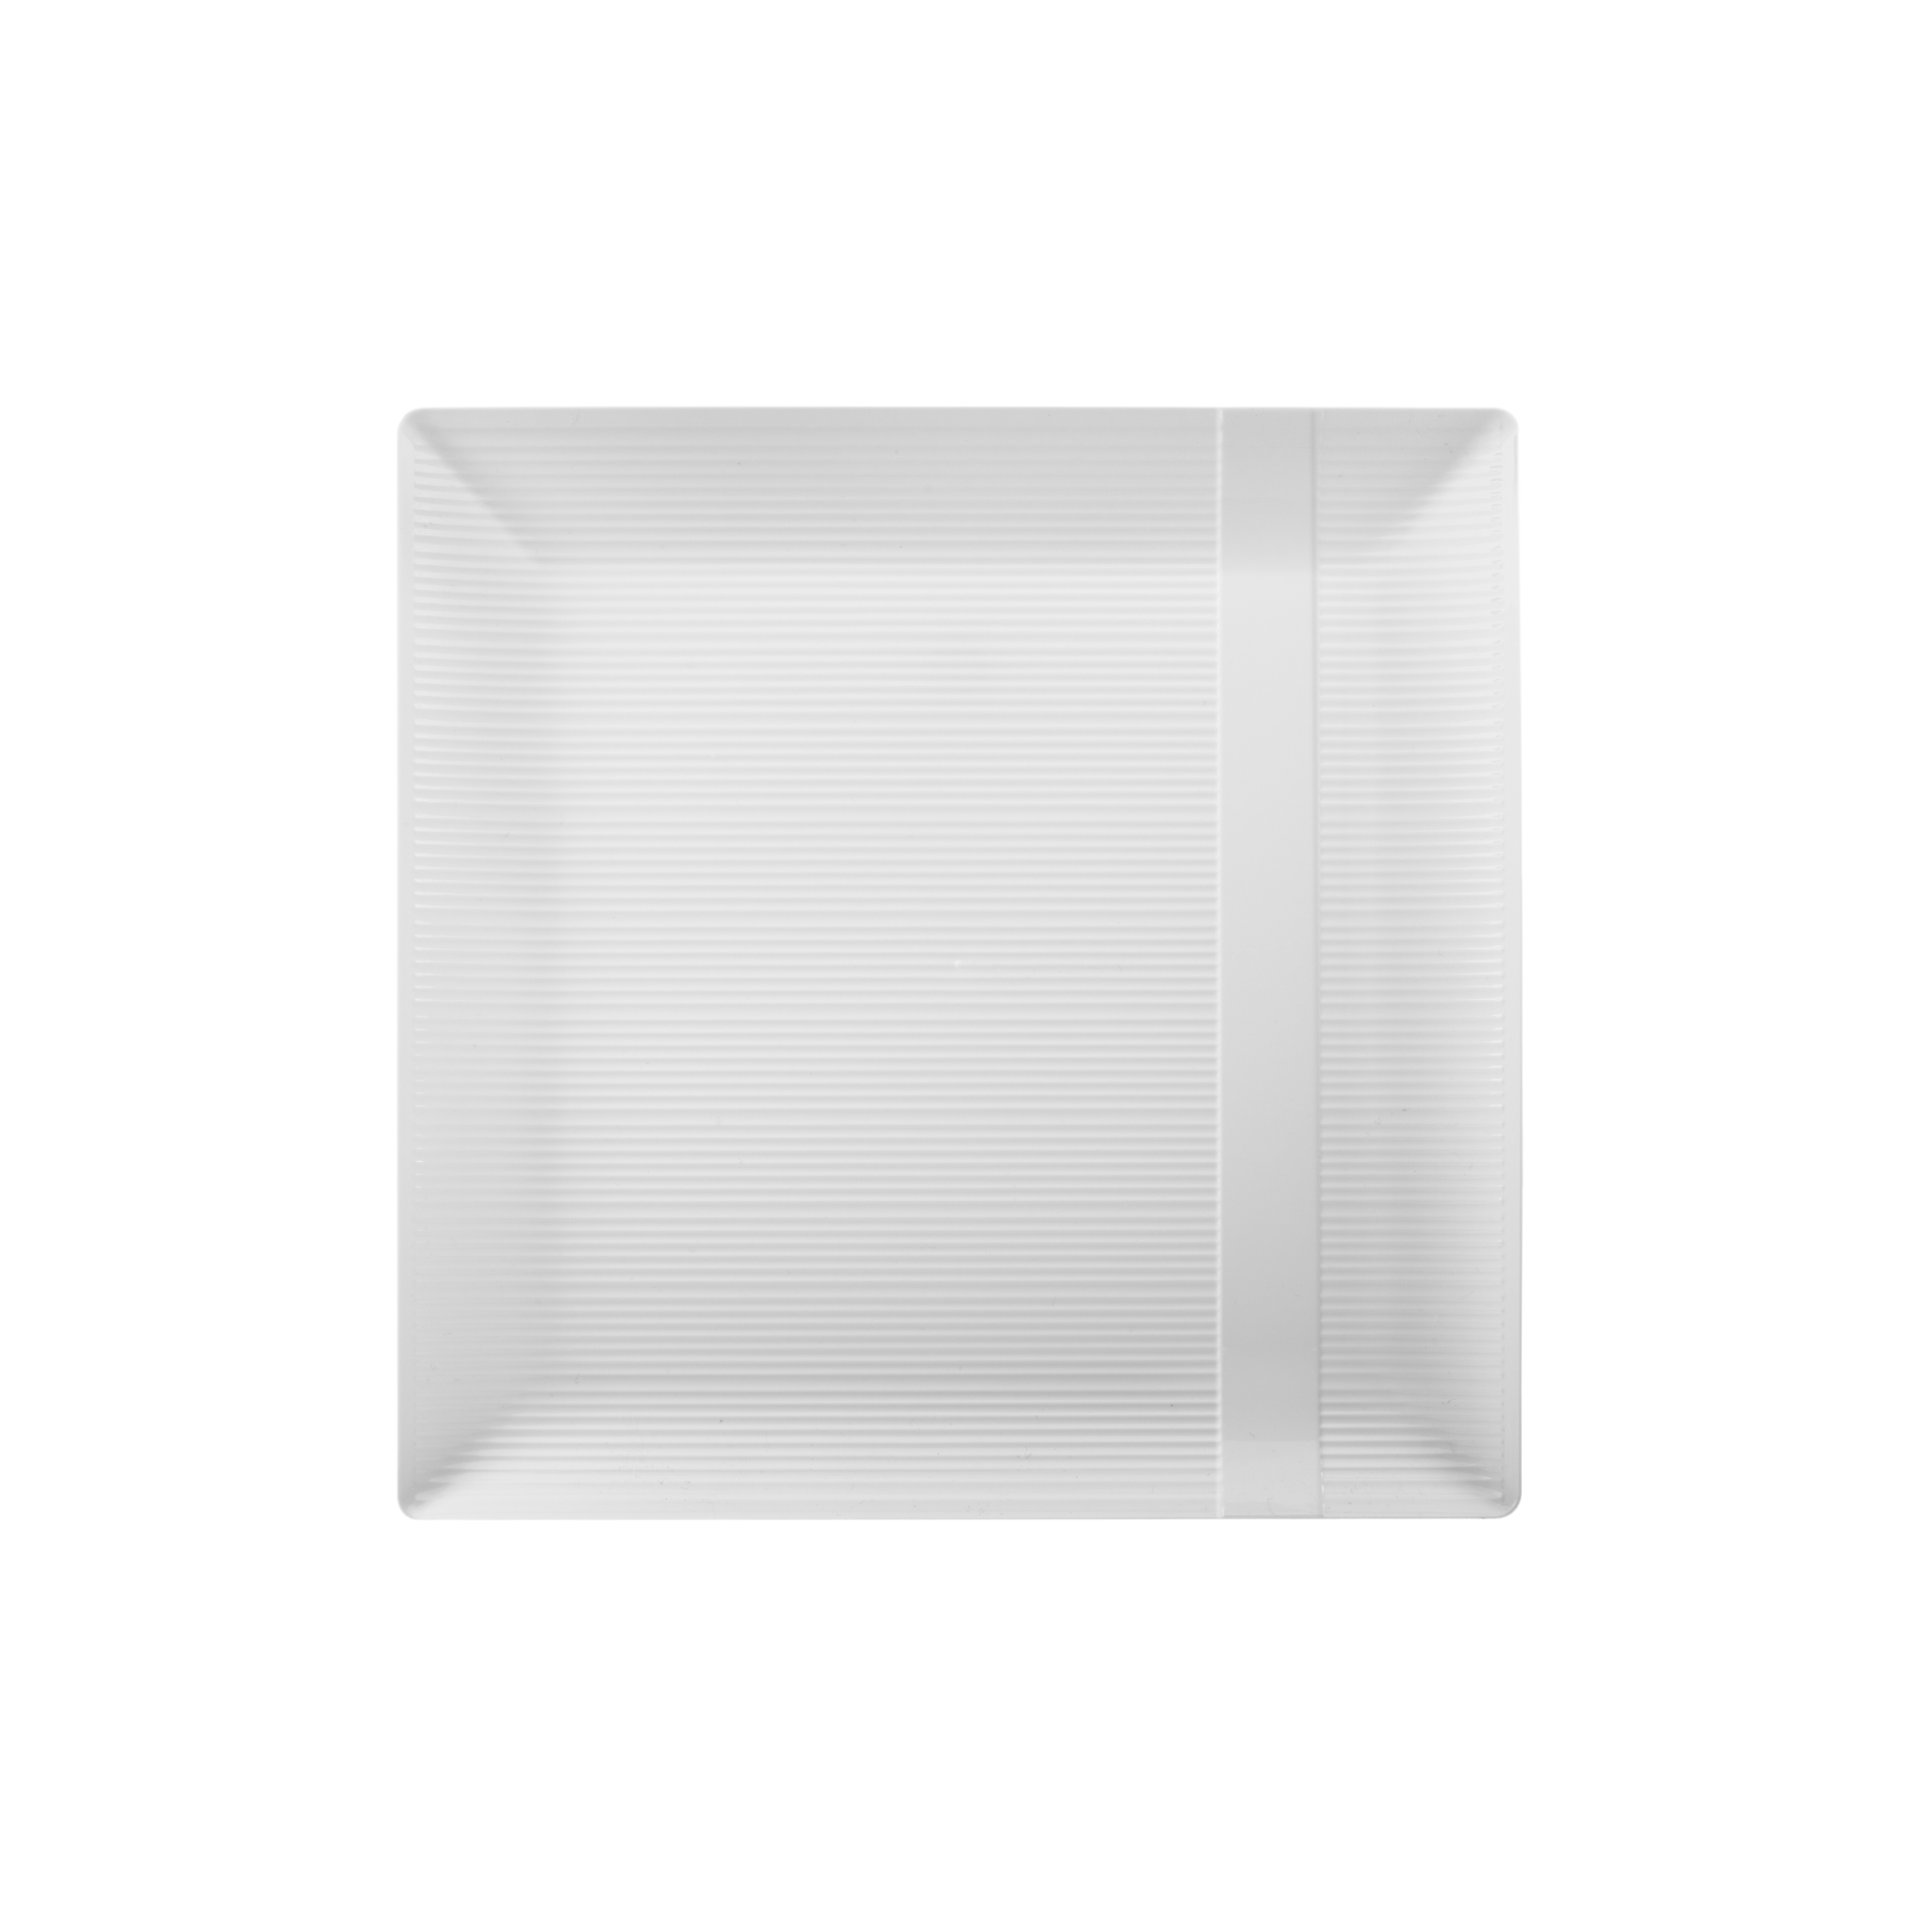 7.5" Zen Ridged White Square Plastic Plates (120 Count)